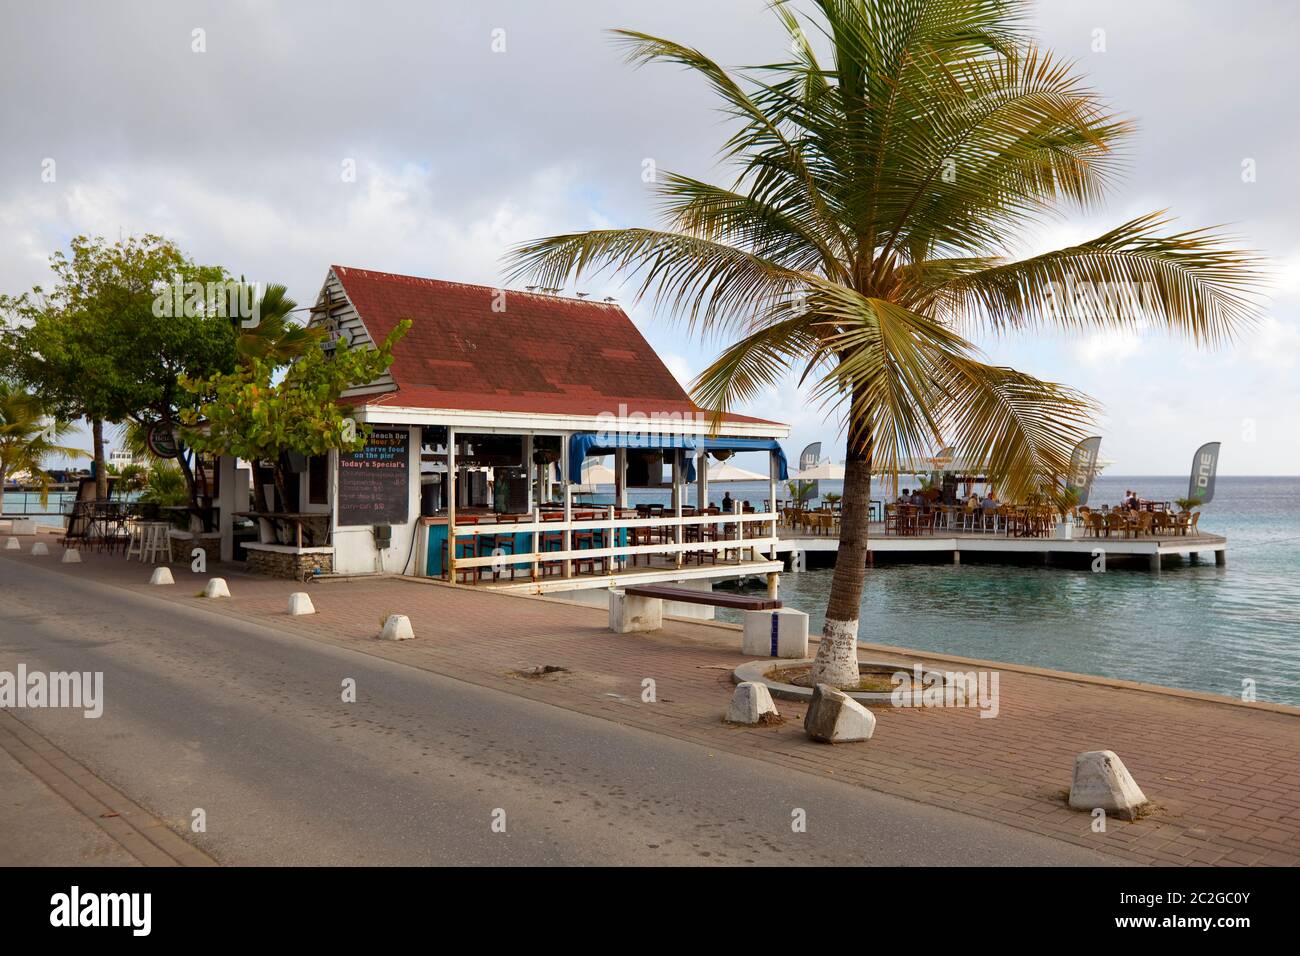 Bar sulla spiaggia a Kralendijk, Bonaire. Antille olandesi. Foto V.D. Foto Stock